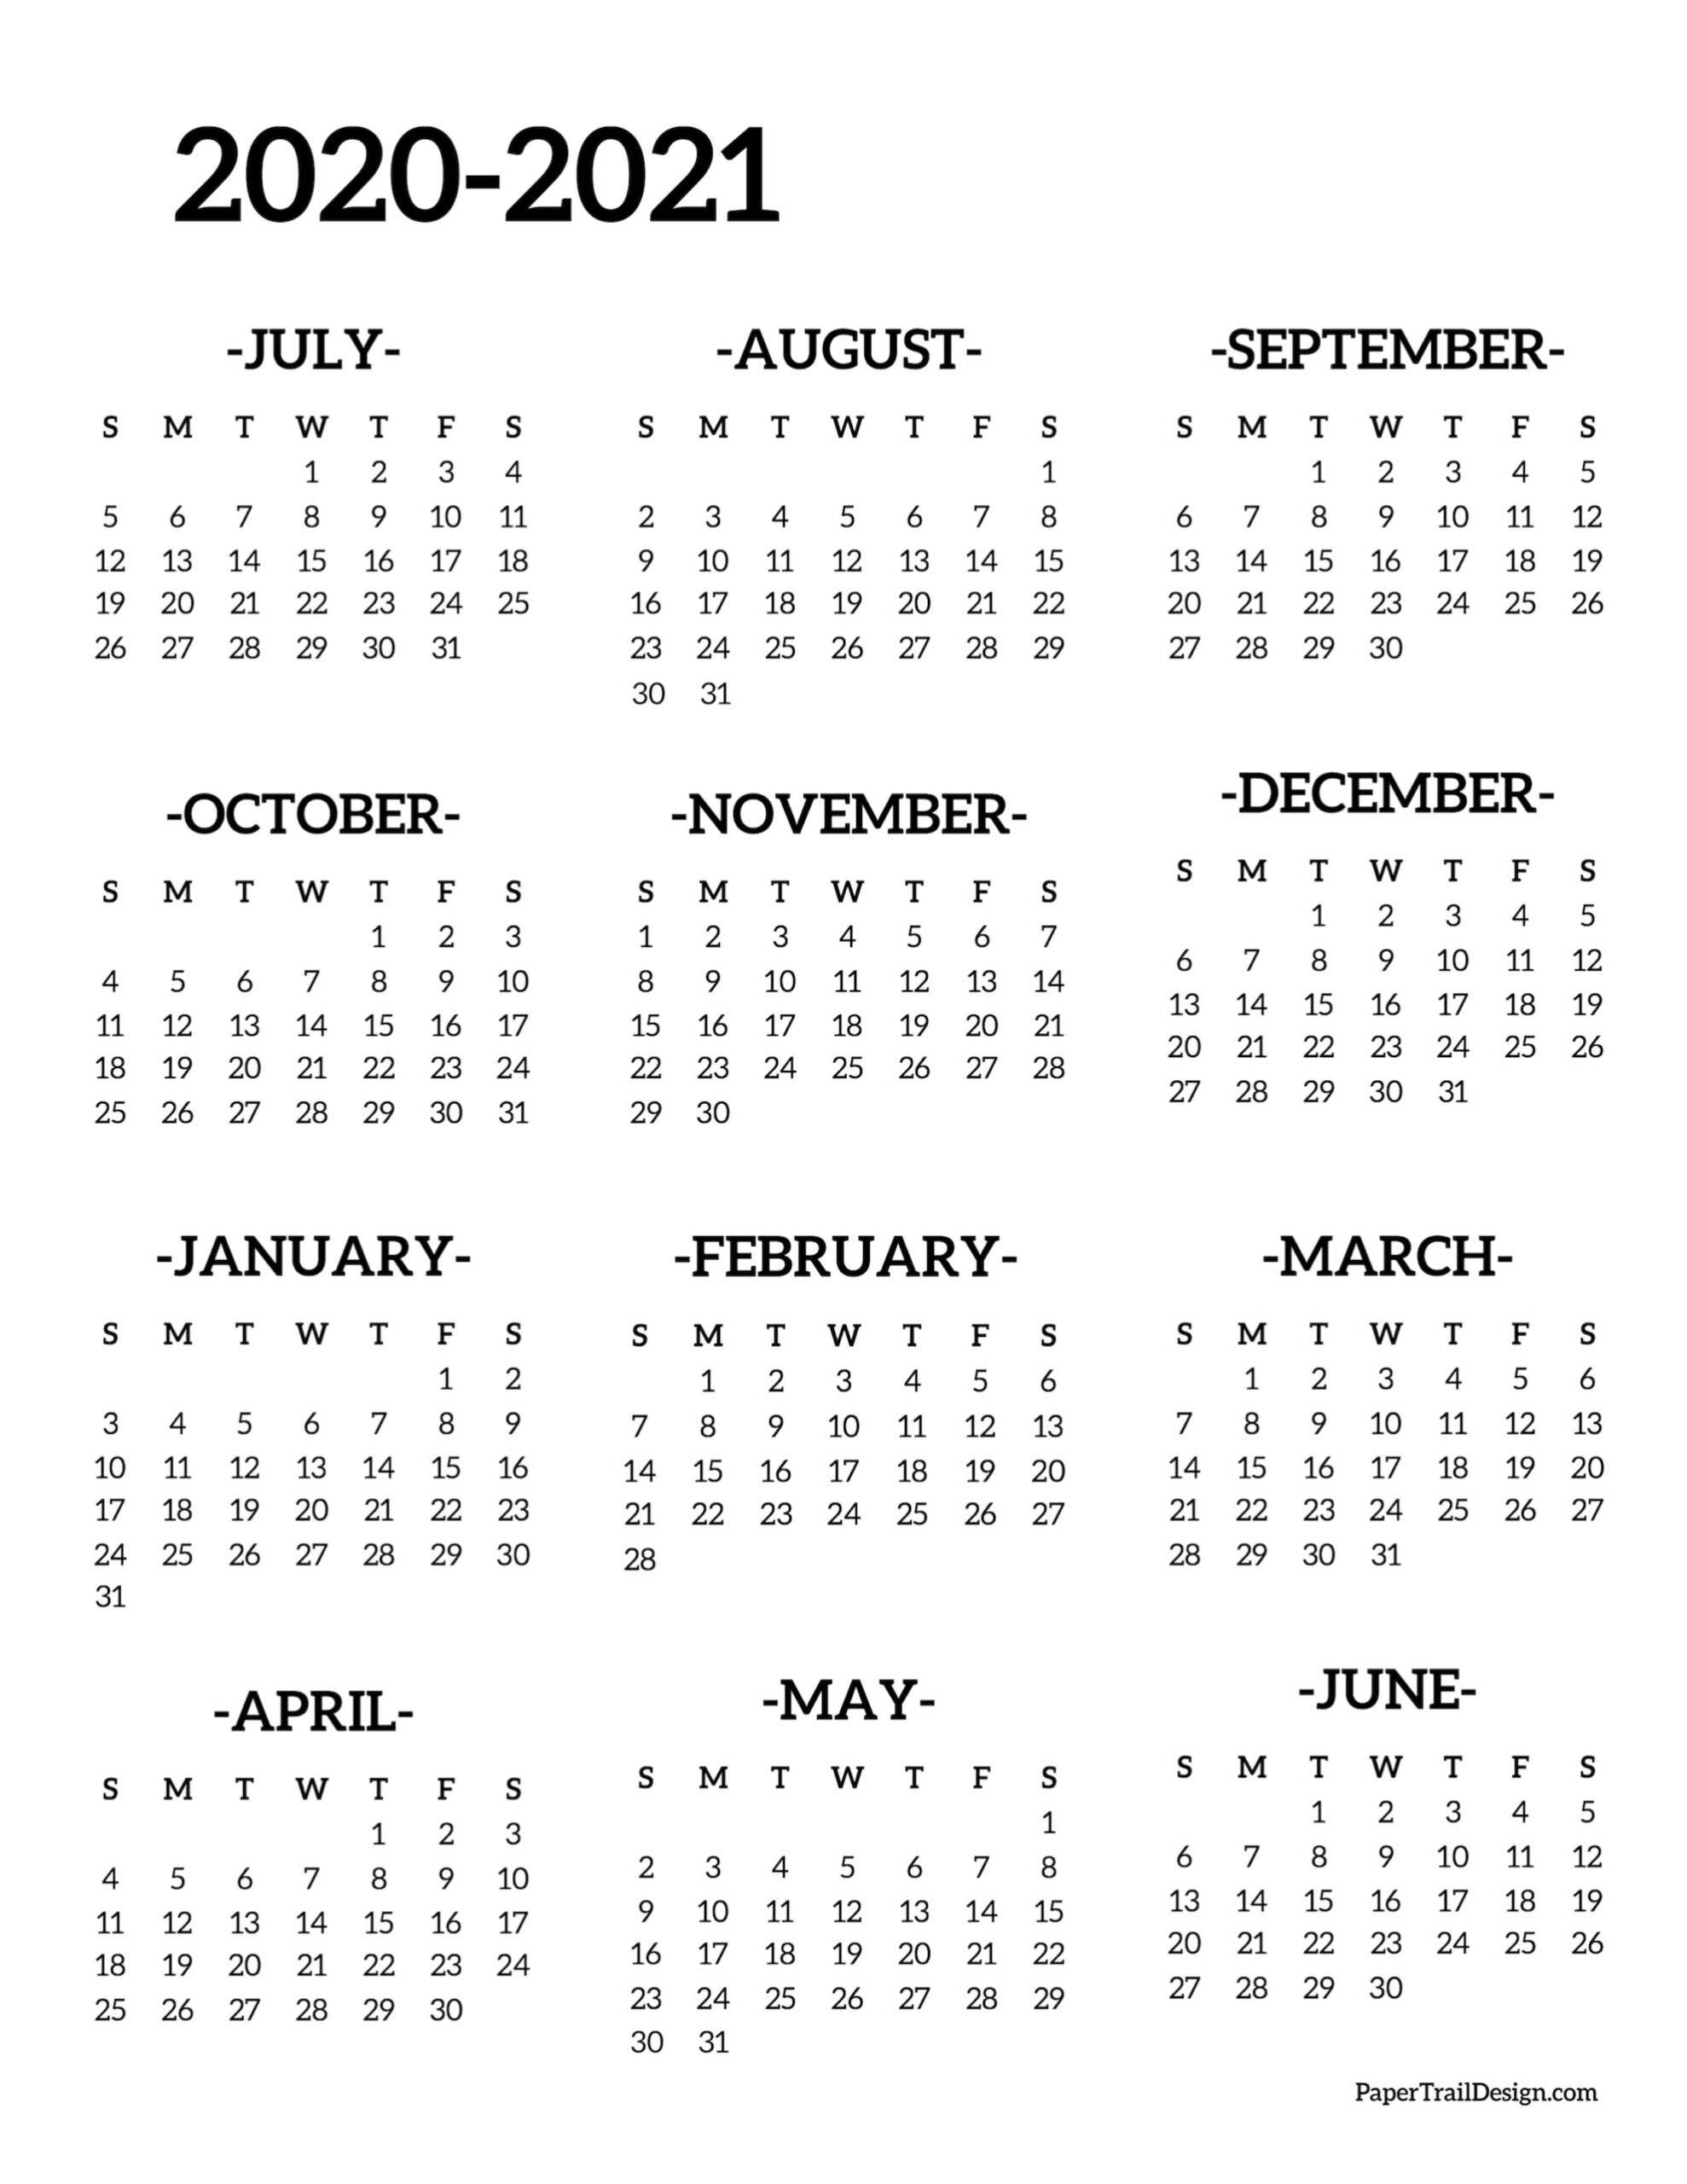 2020-2021 School Year Calendar Free Printable | Paper